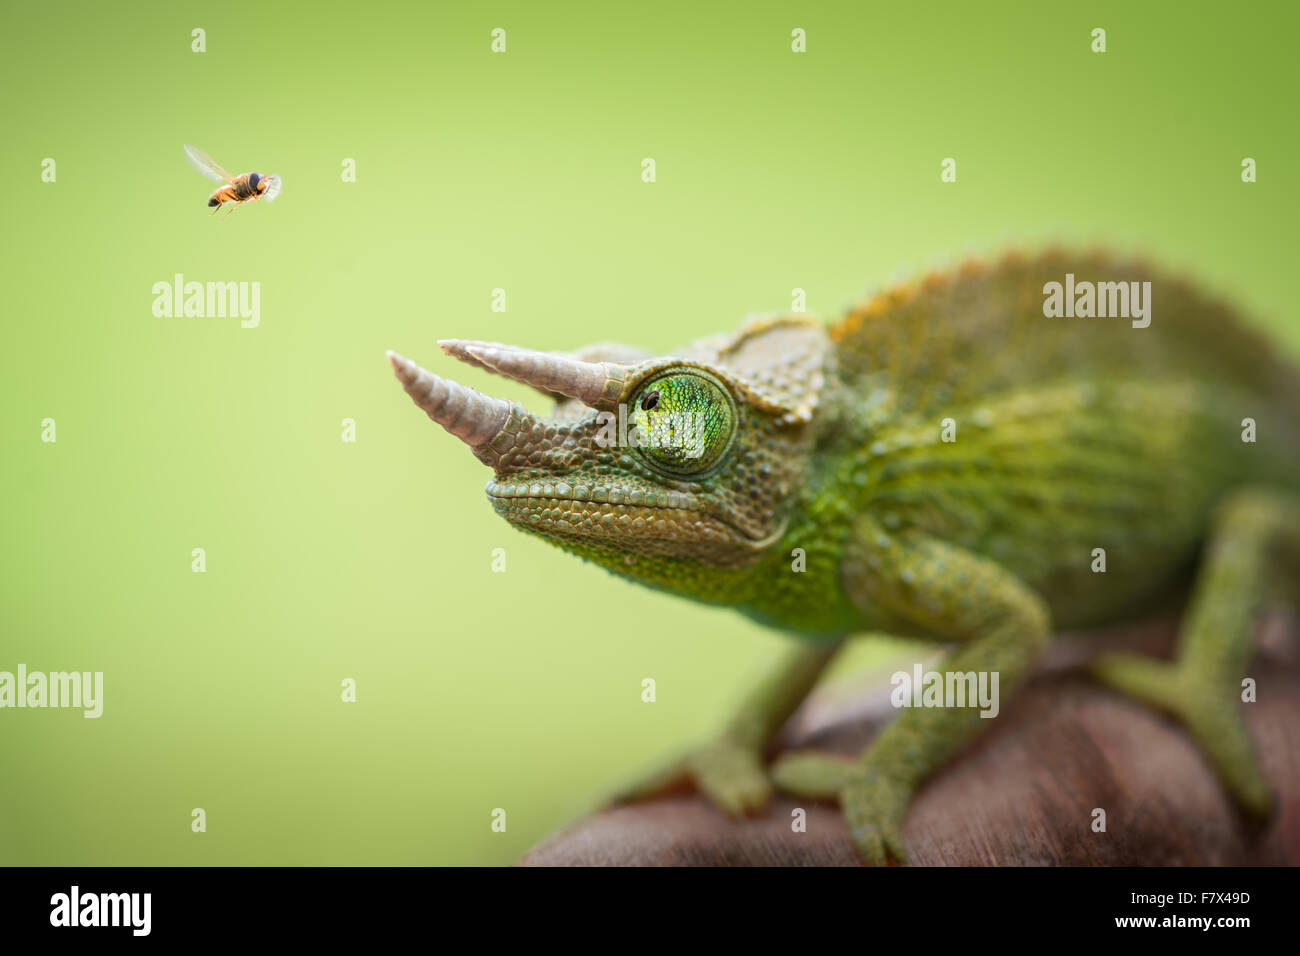 Hoverfly hovering next to a Jackson's chameleon (trioceros jacksonii) Stock Photo